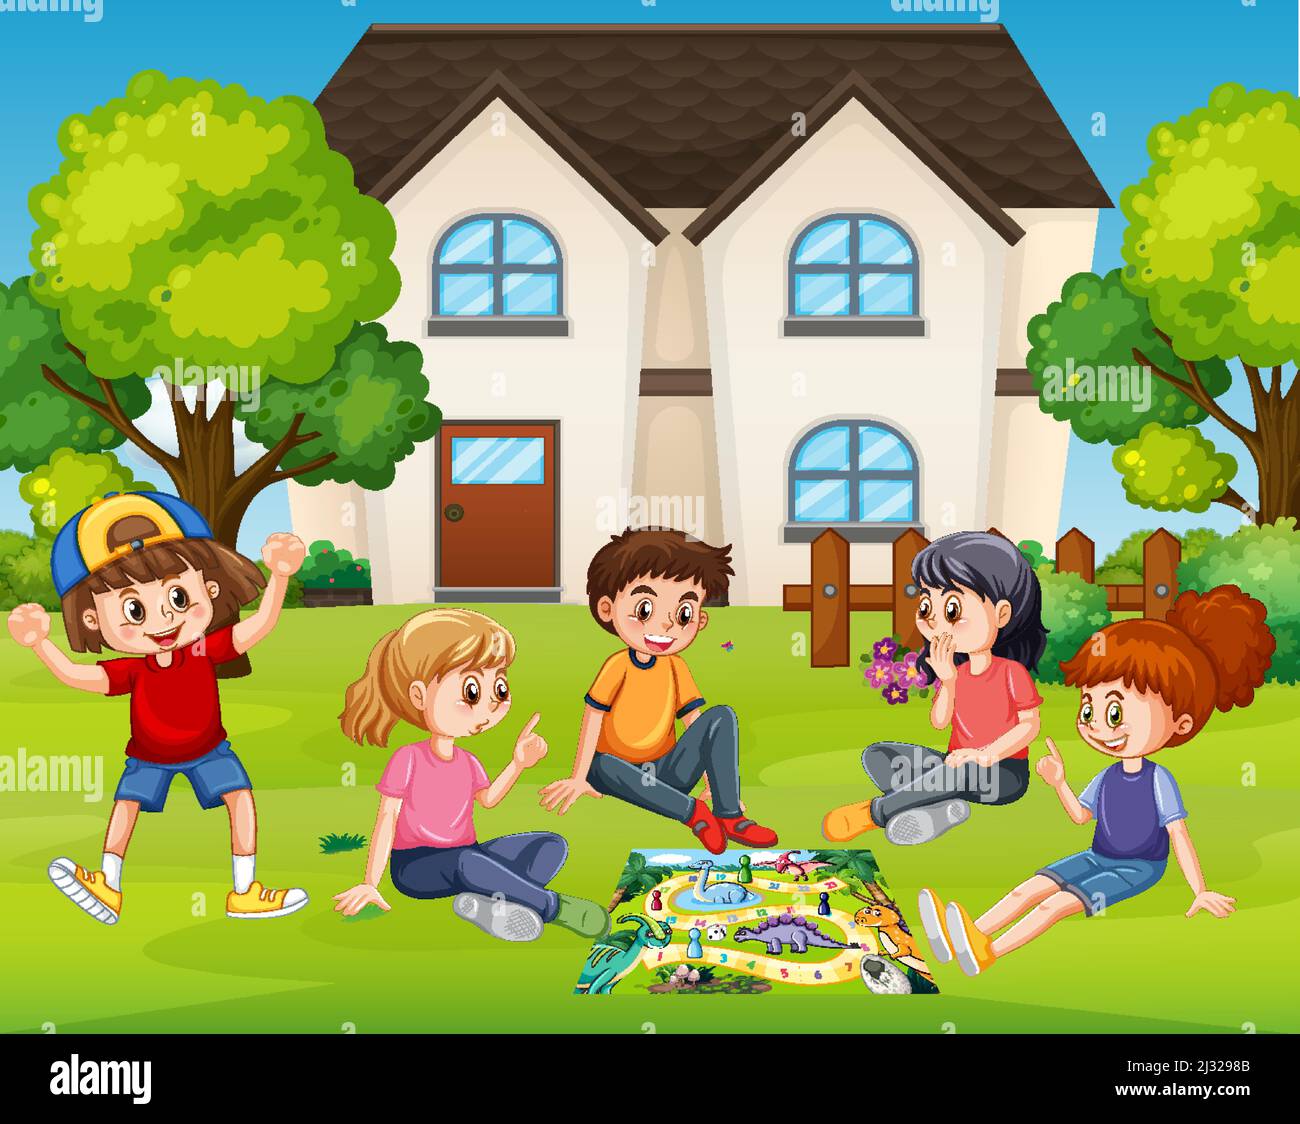 kids playing outside animated